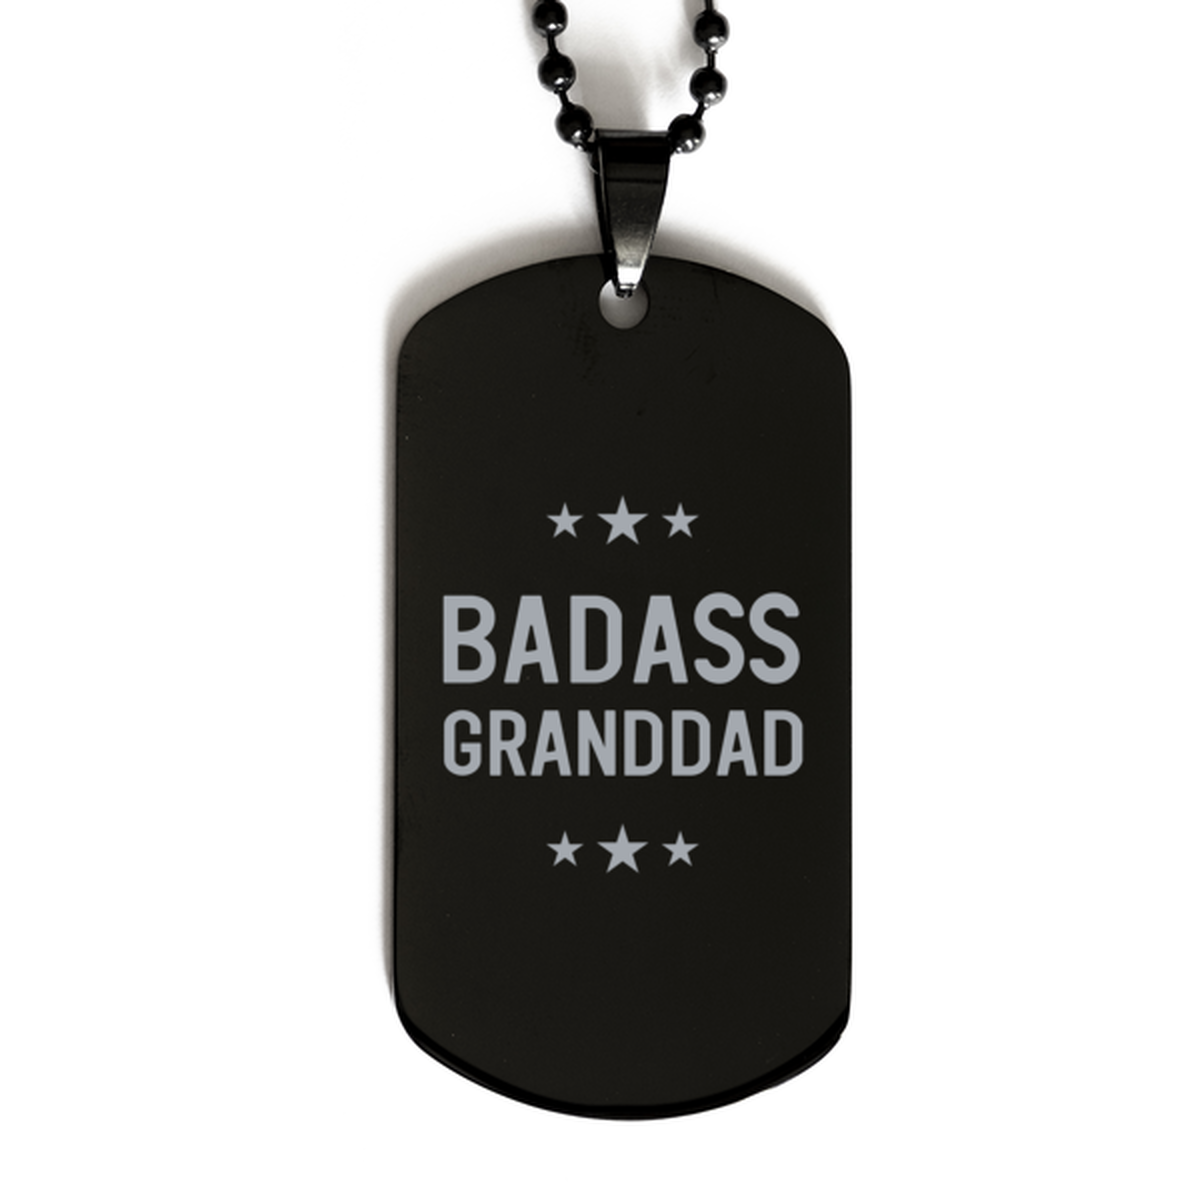 Granddad Black Dog Tag, Badass Granddad, Funny Family Gifts  Necklace For Granddad From Granddaughter Grandson